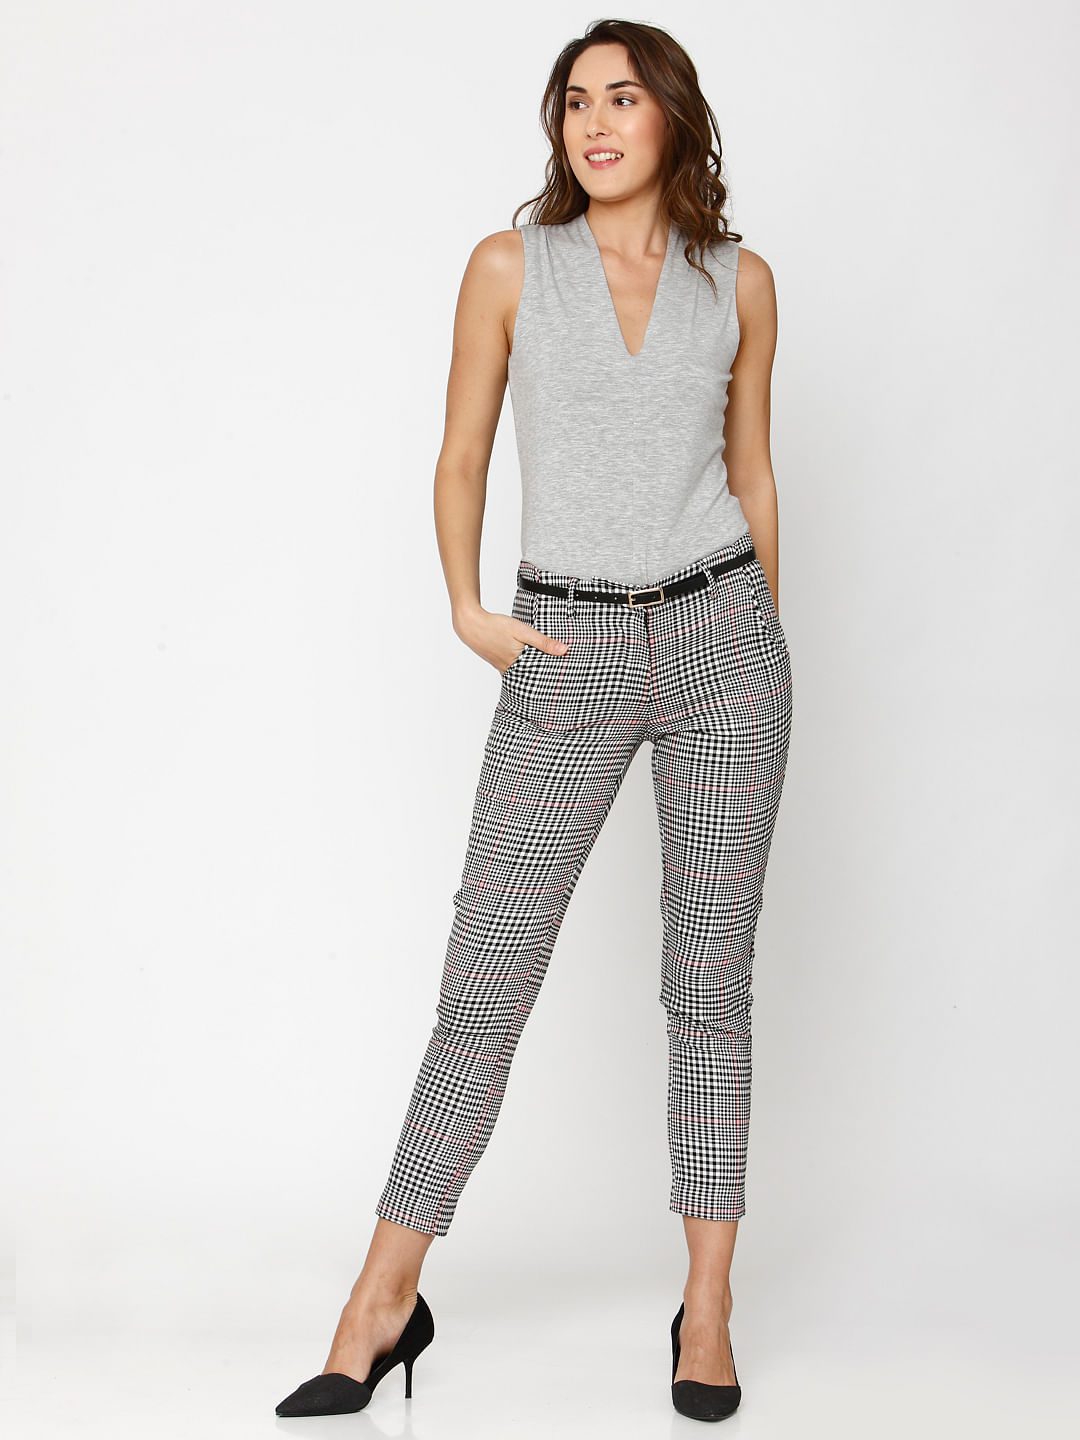 Buy Plus Size Black White Check Pants Online For Women  Amydus